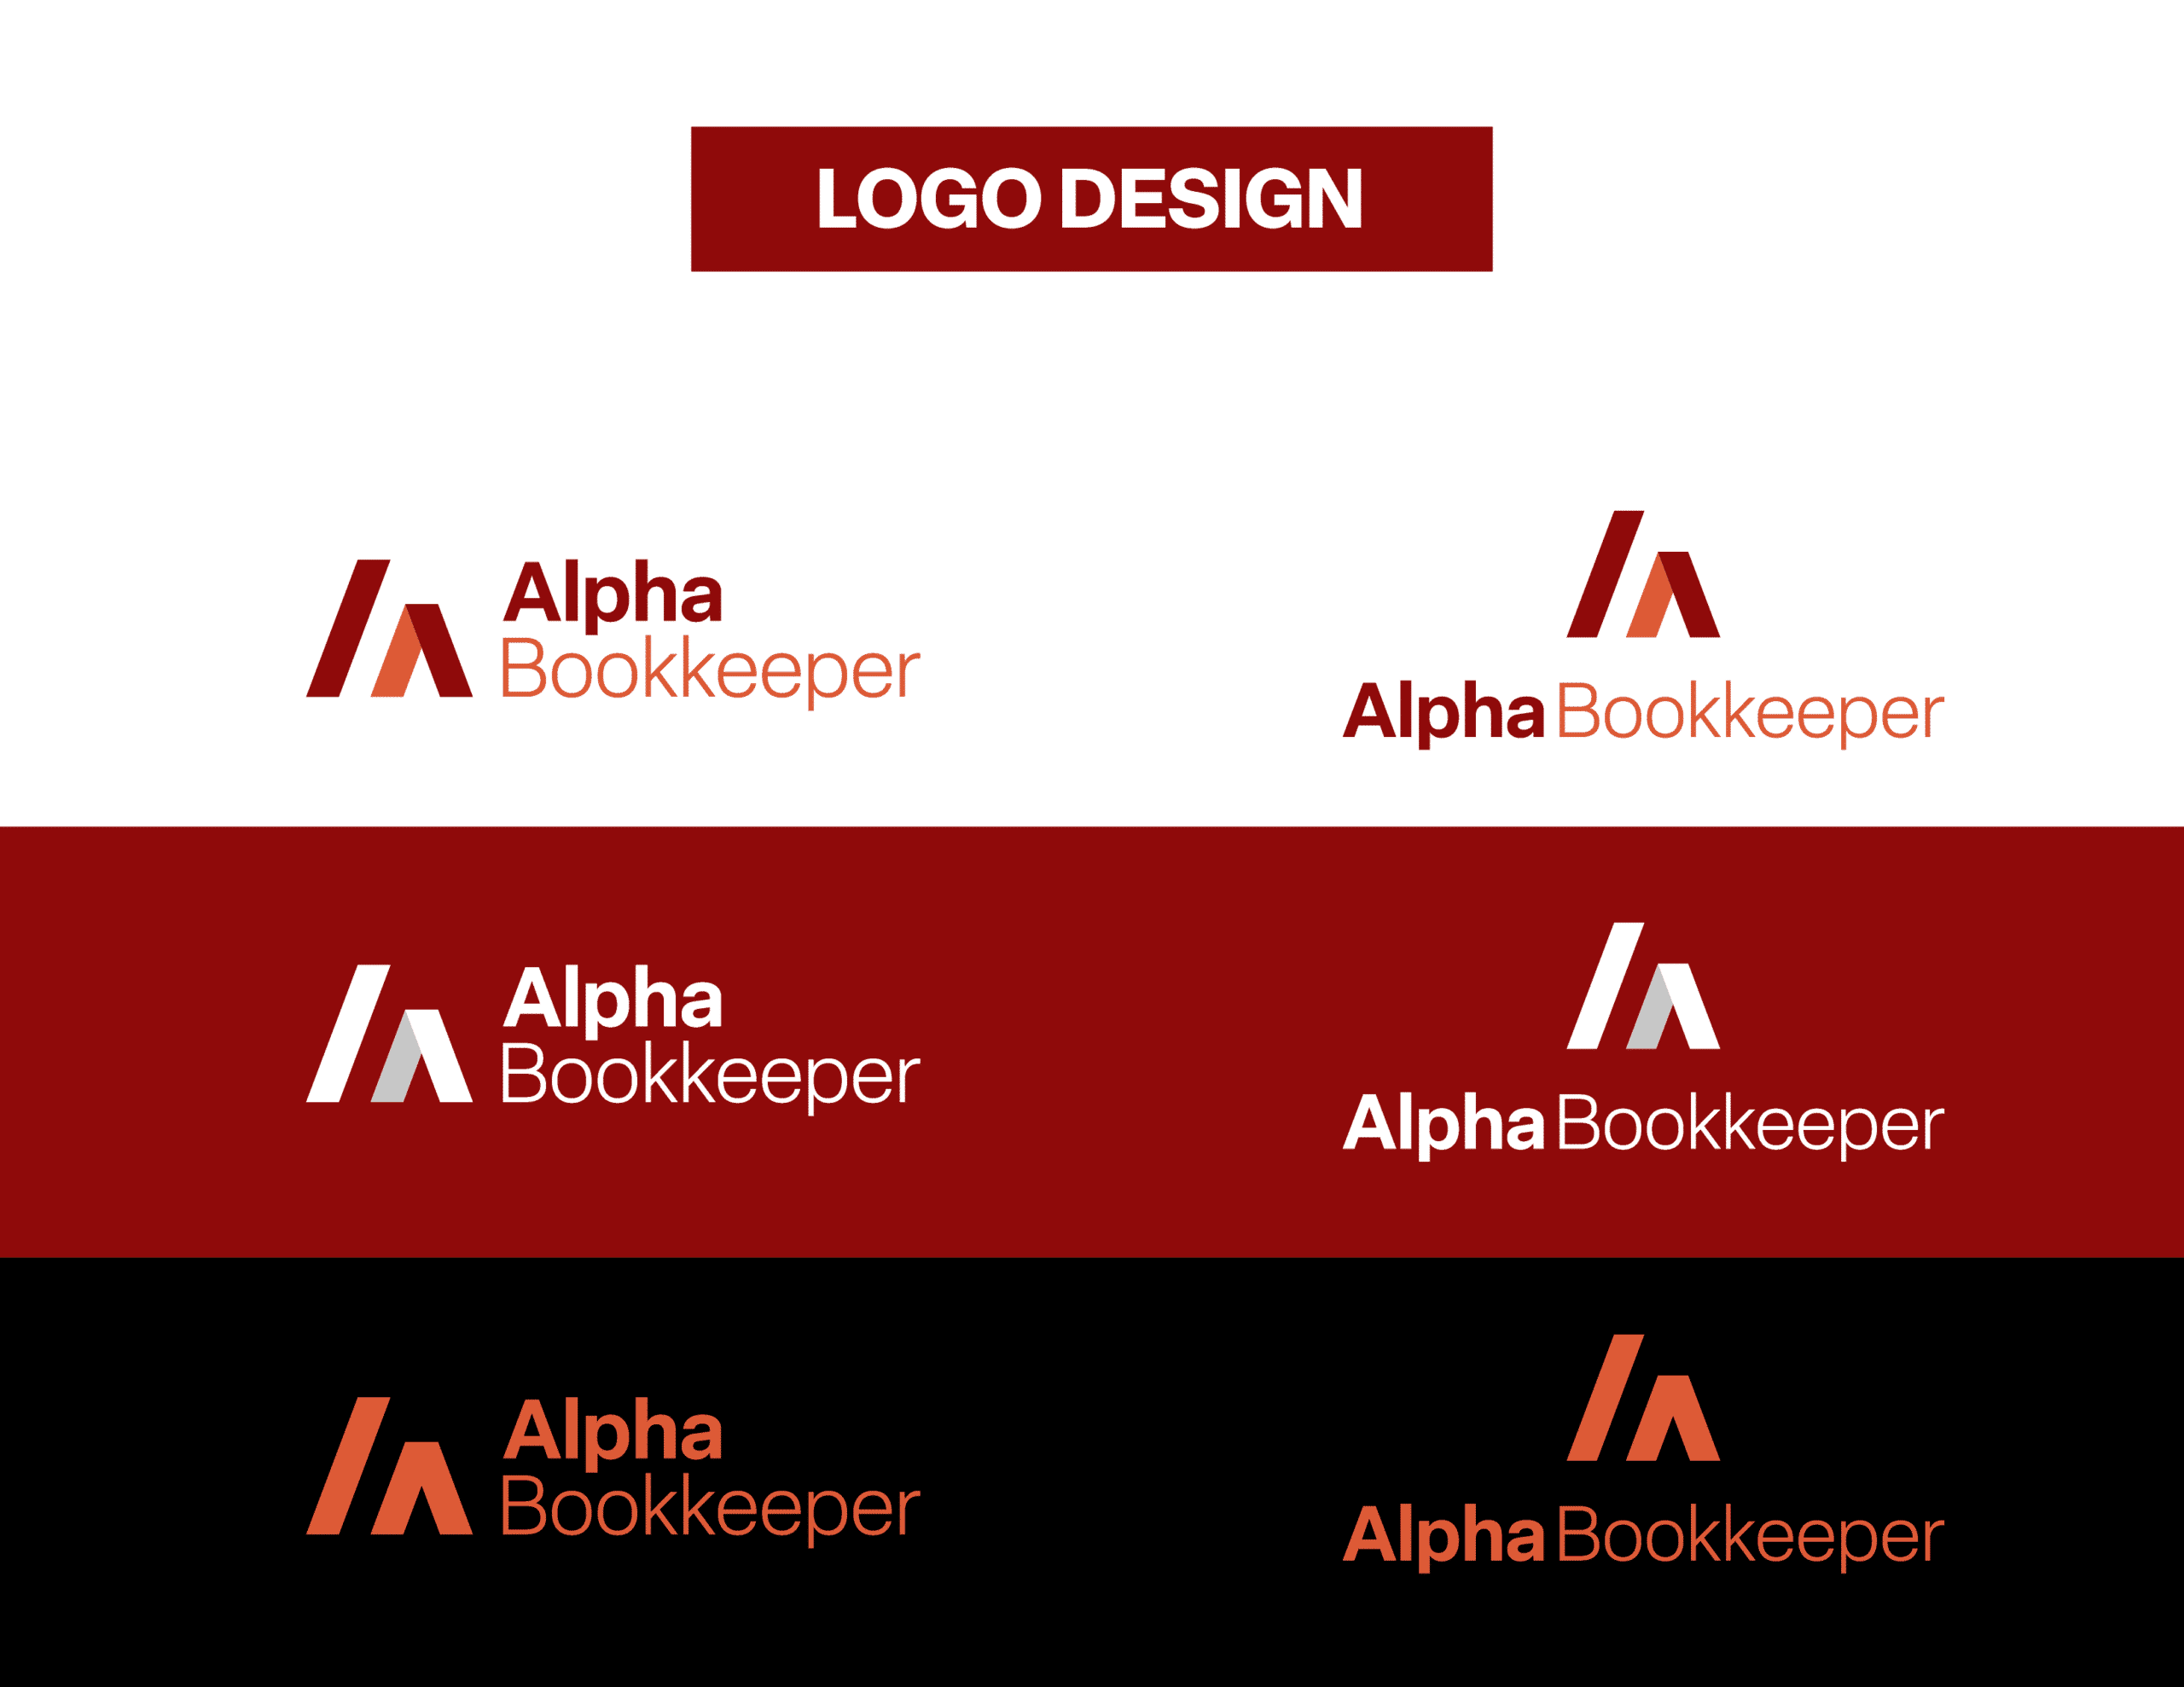 01Alpha_Showcase_Logo Design